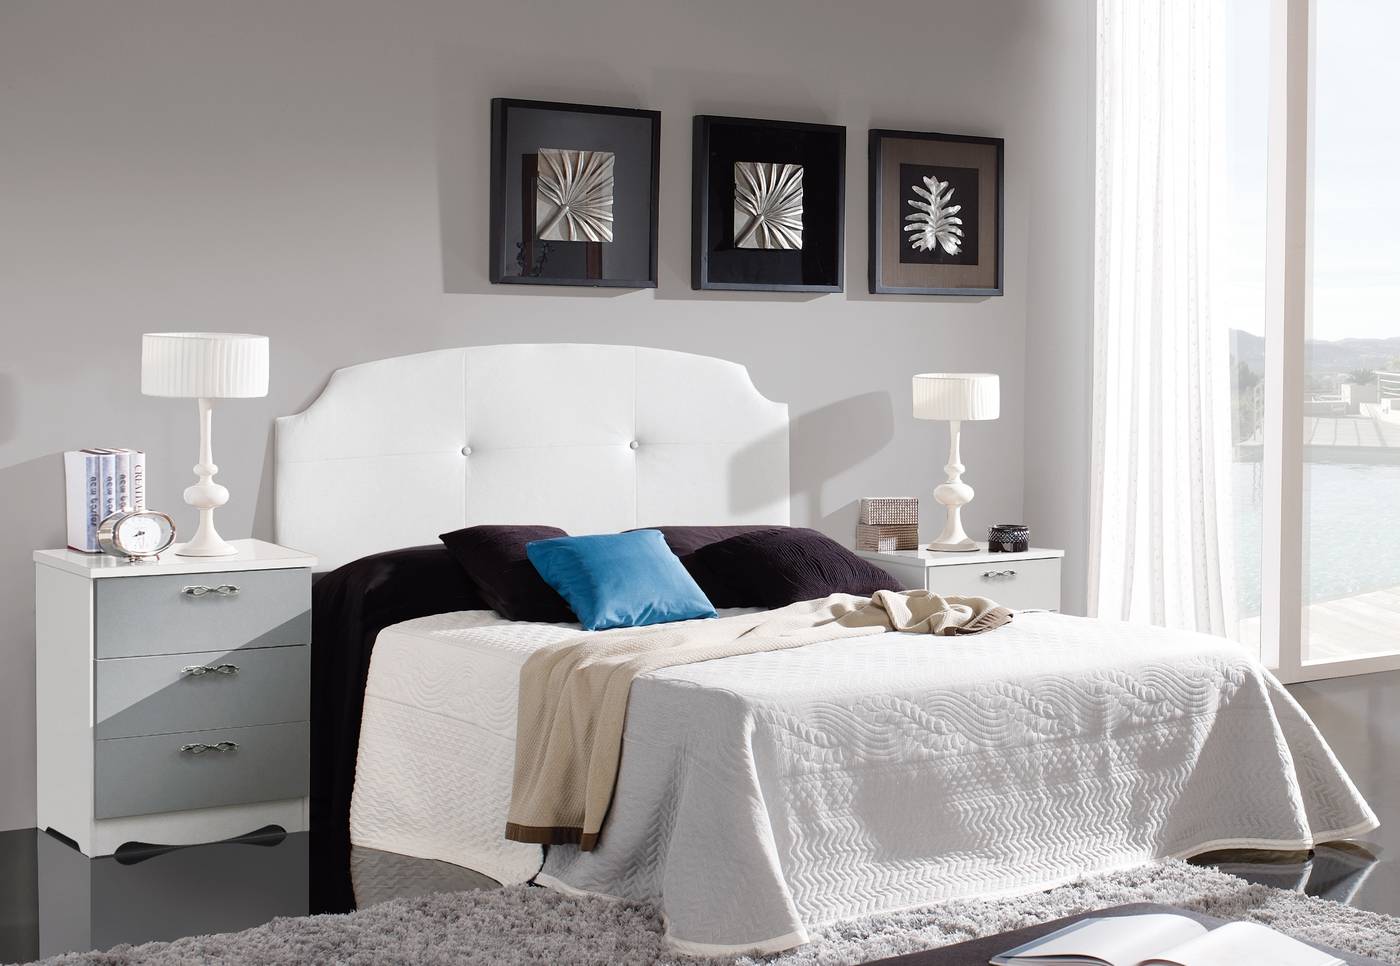 Cabezal Vintage Polipiel Blanco - Cabezal cama matrimonio, tapizado de polipiel color blanco